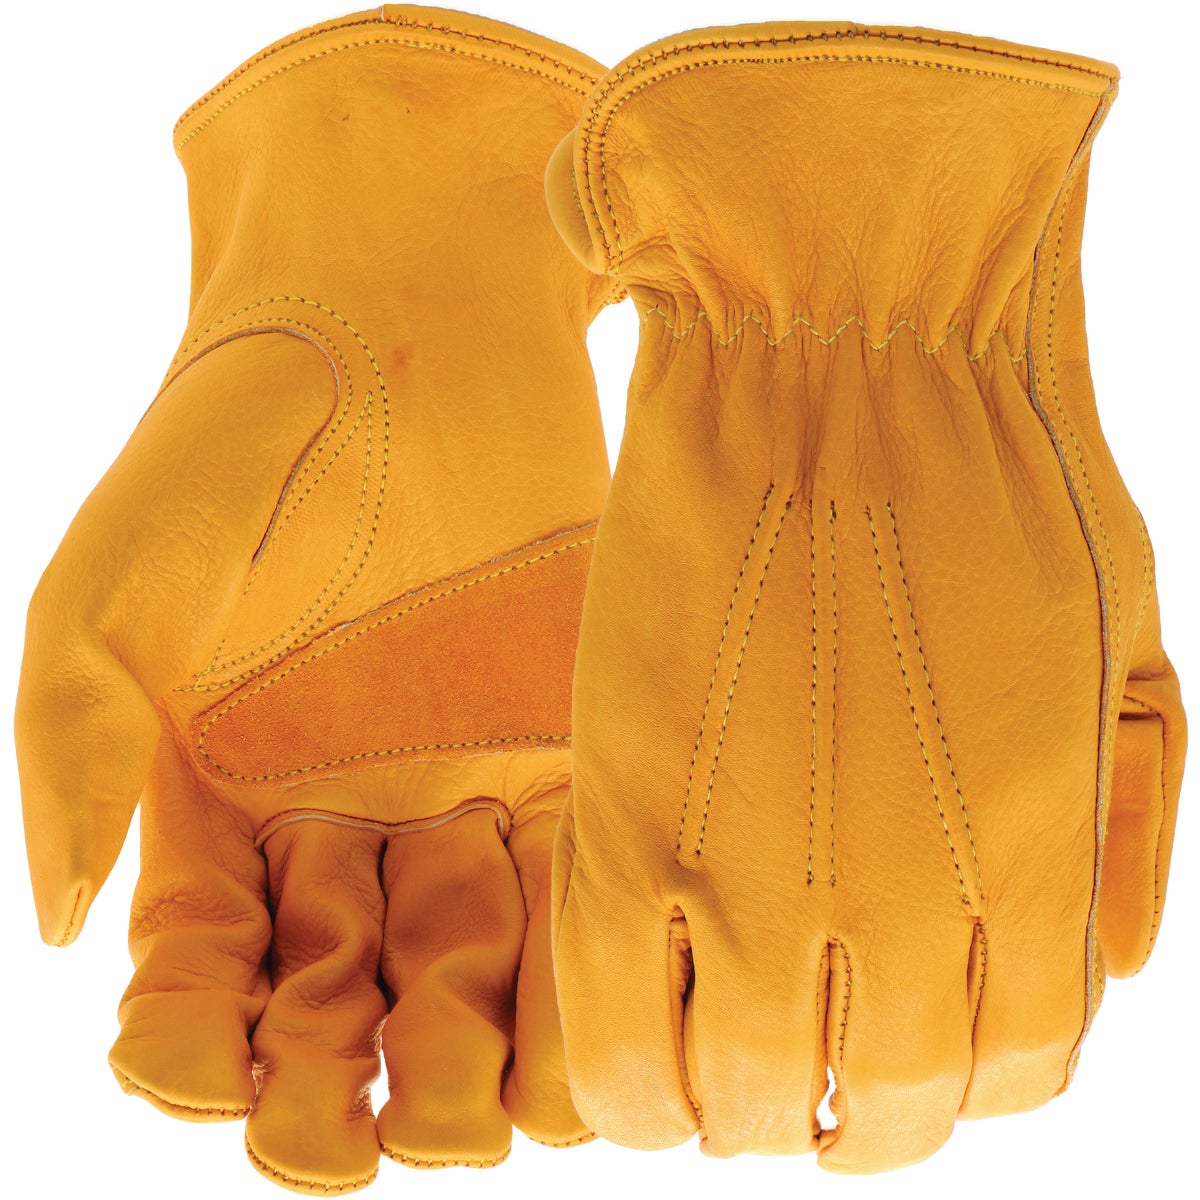 Boss Men's Large Grain Cowhide Leather Work Glove